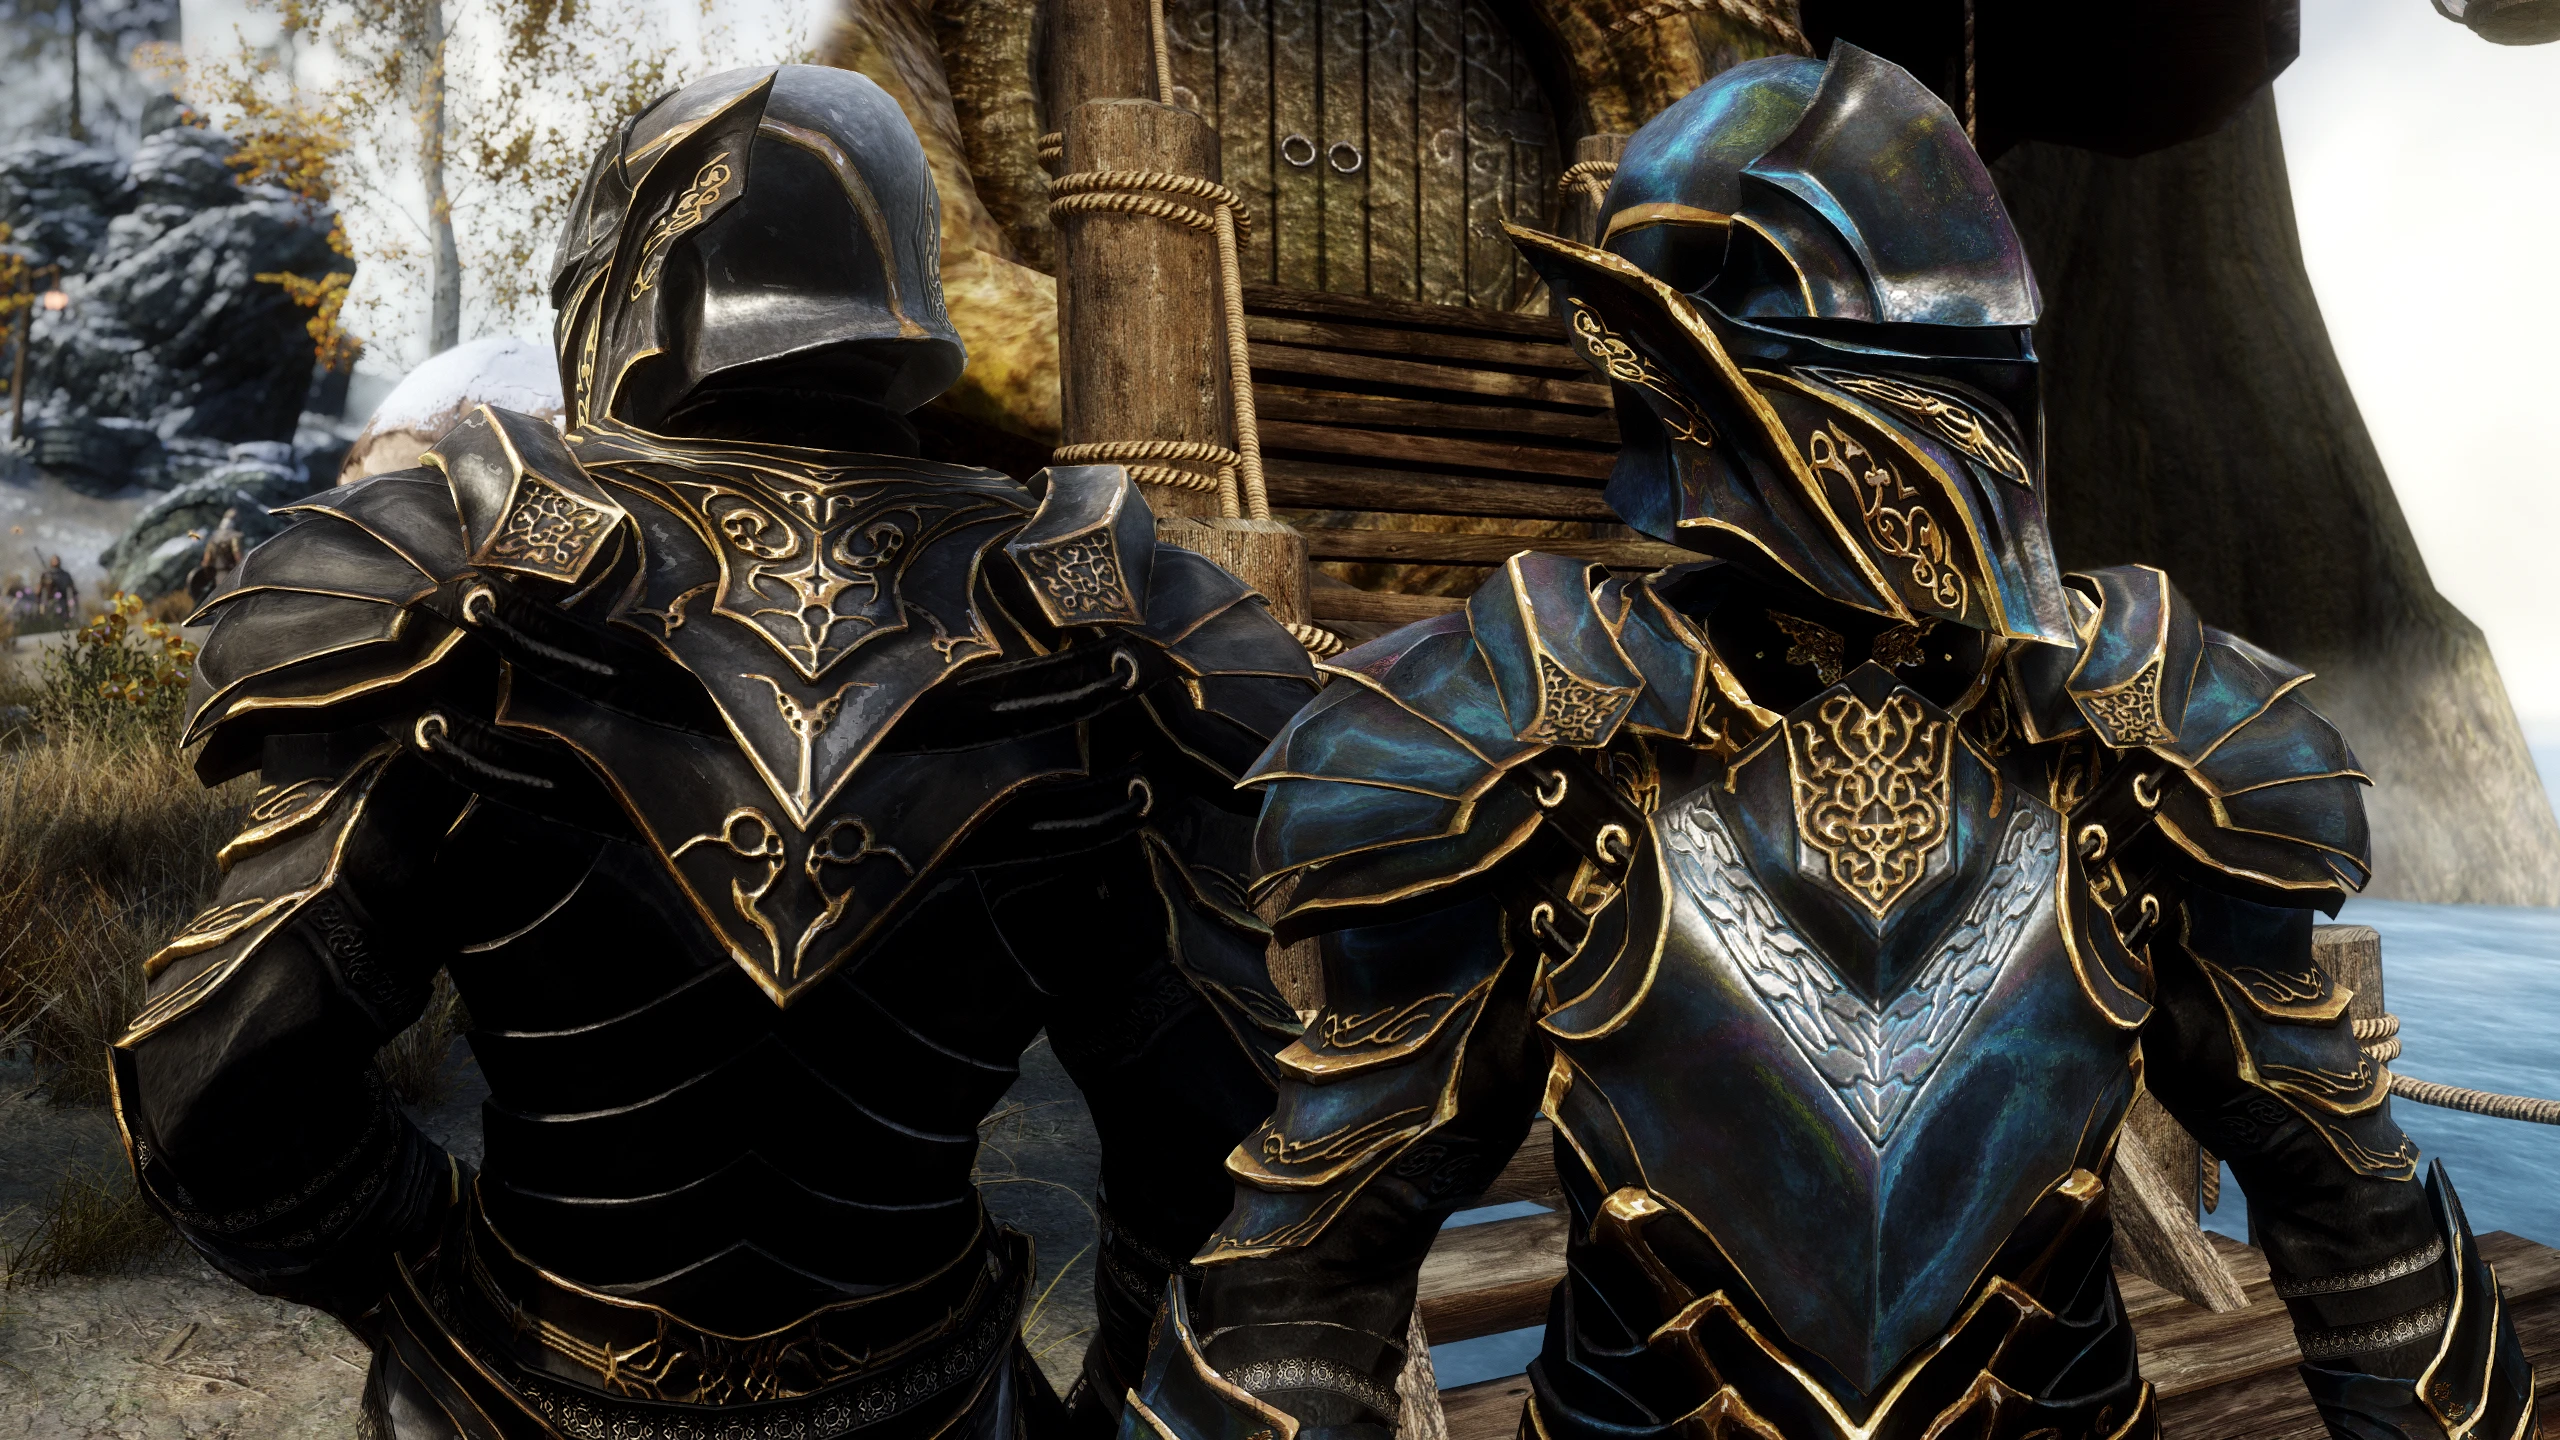 silver knight armor 02 at skyrim nexus mods and community.